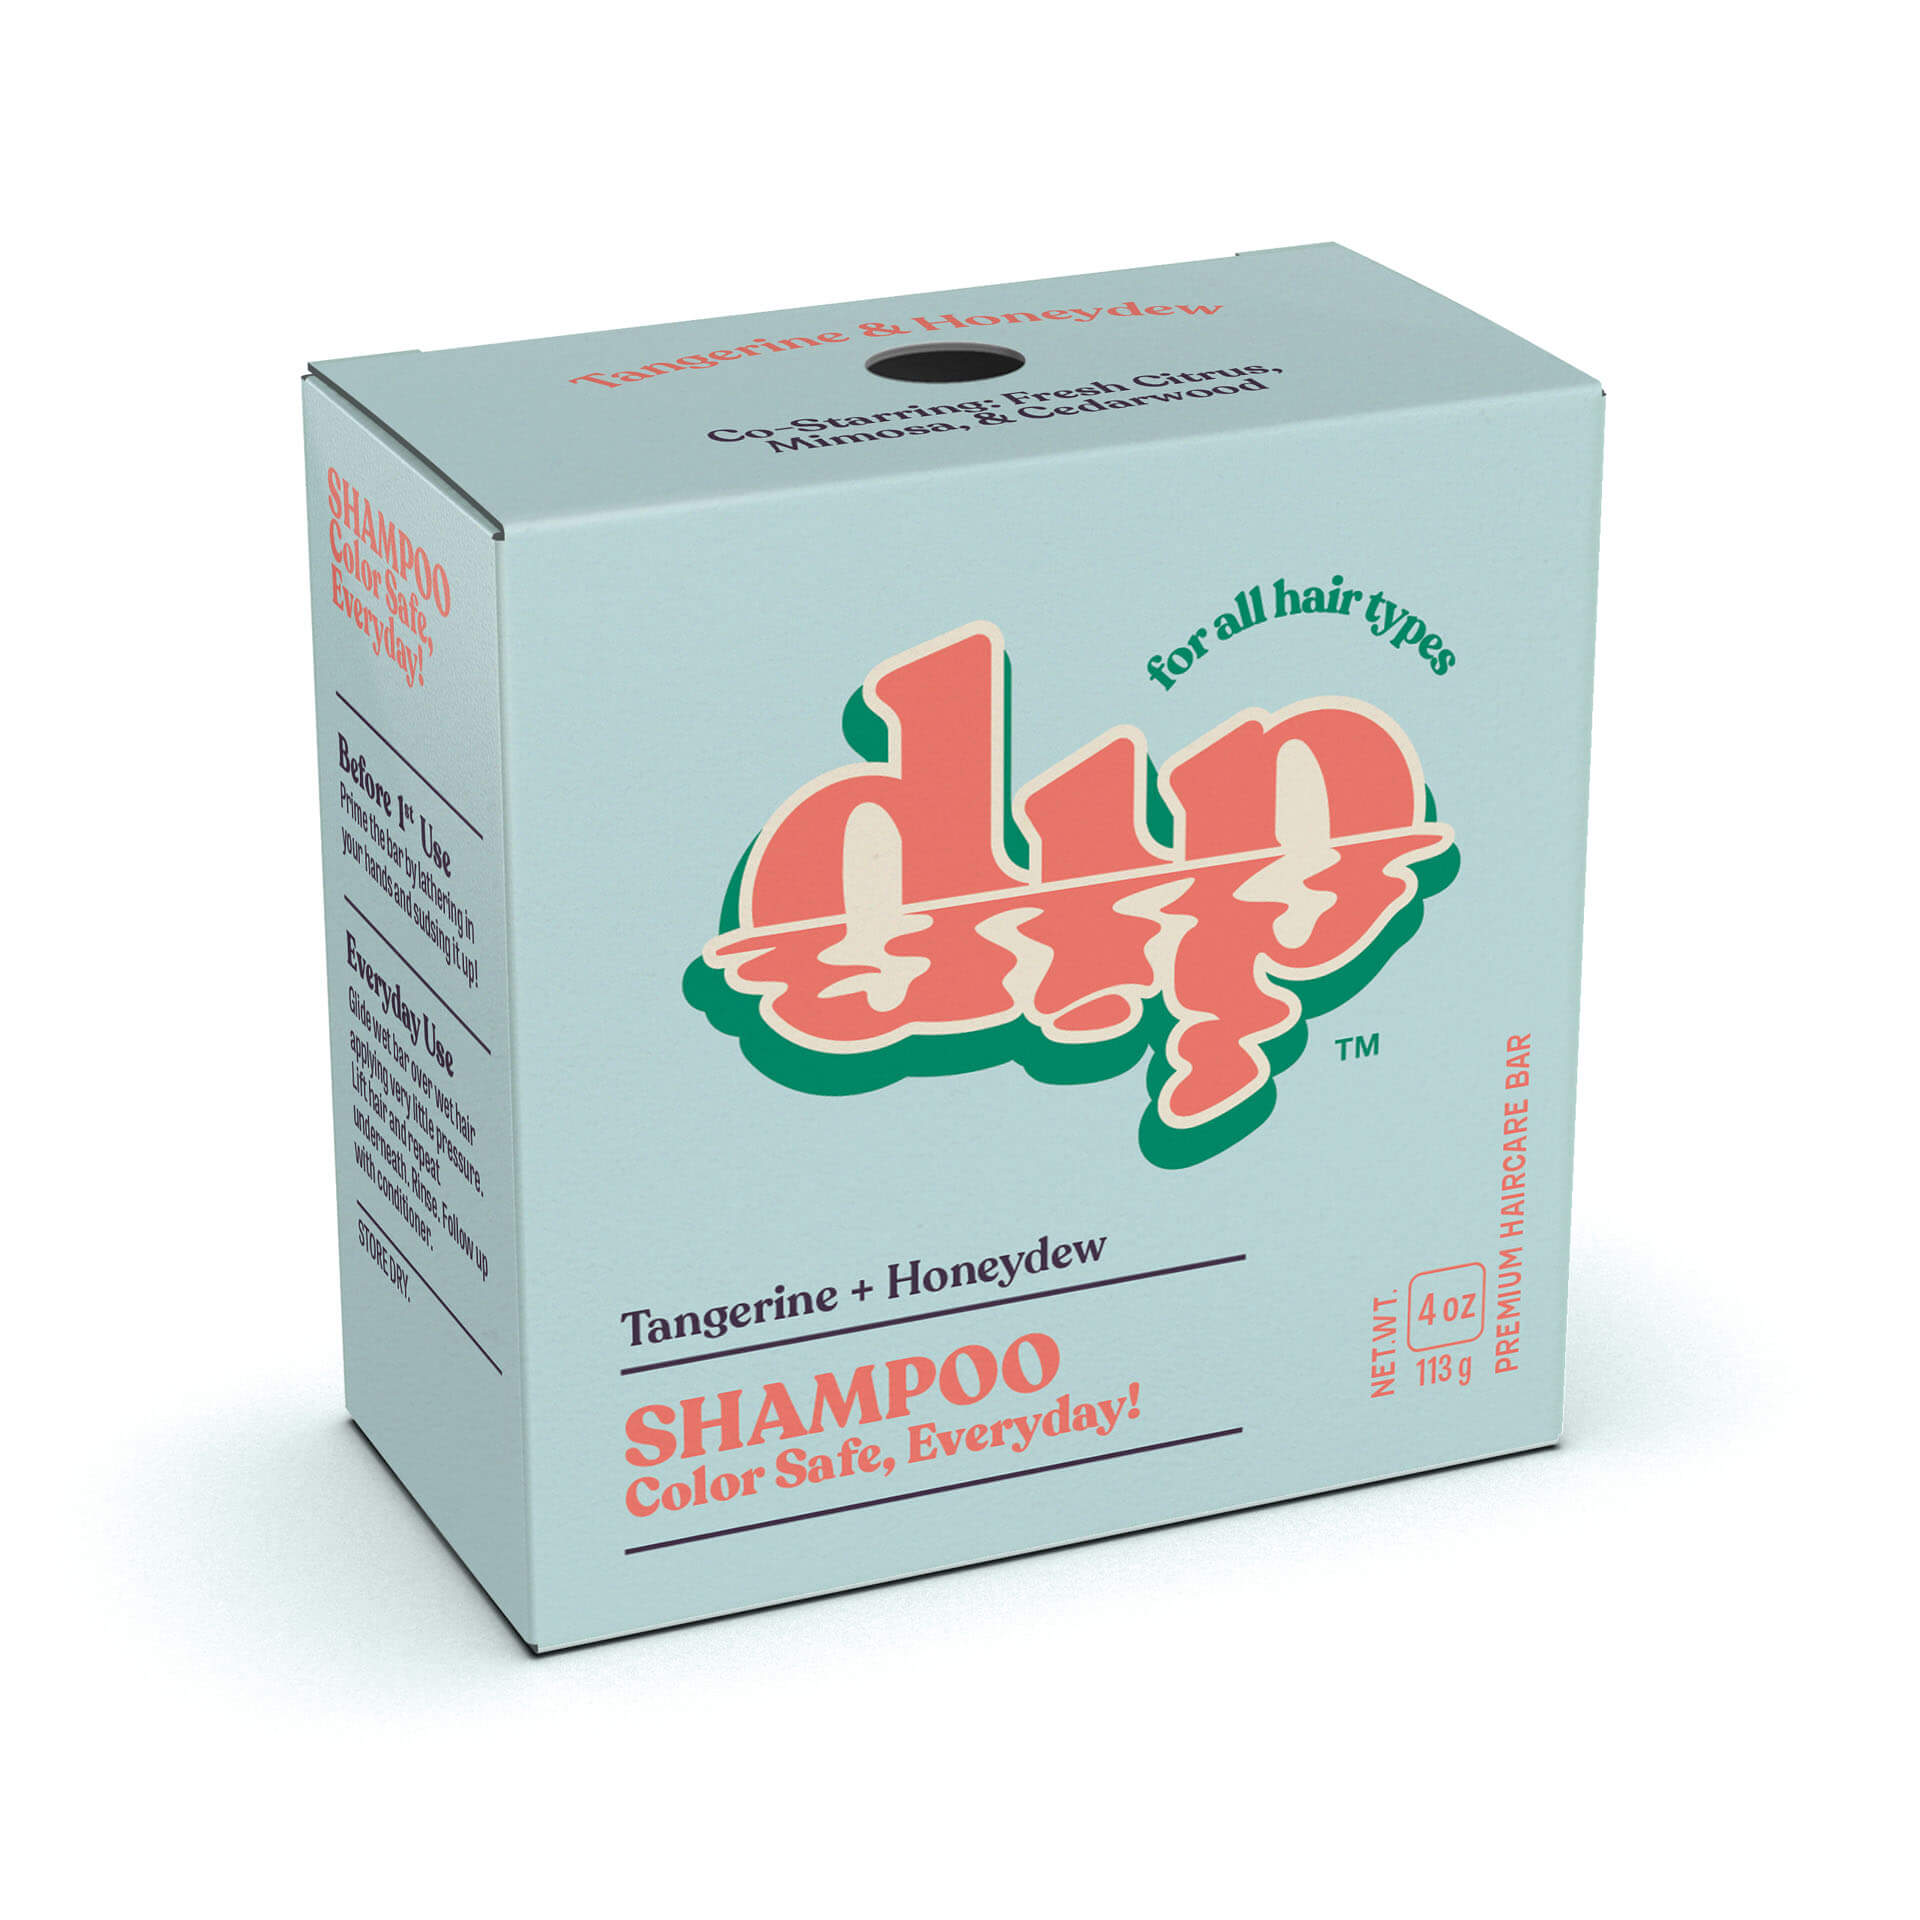 Shampoo Bar by Dip